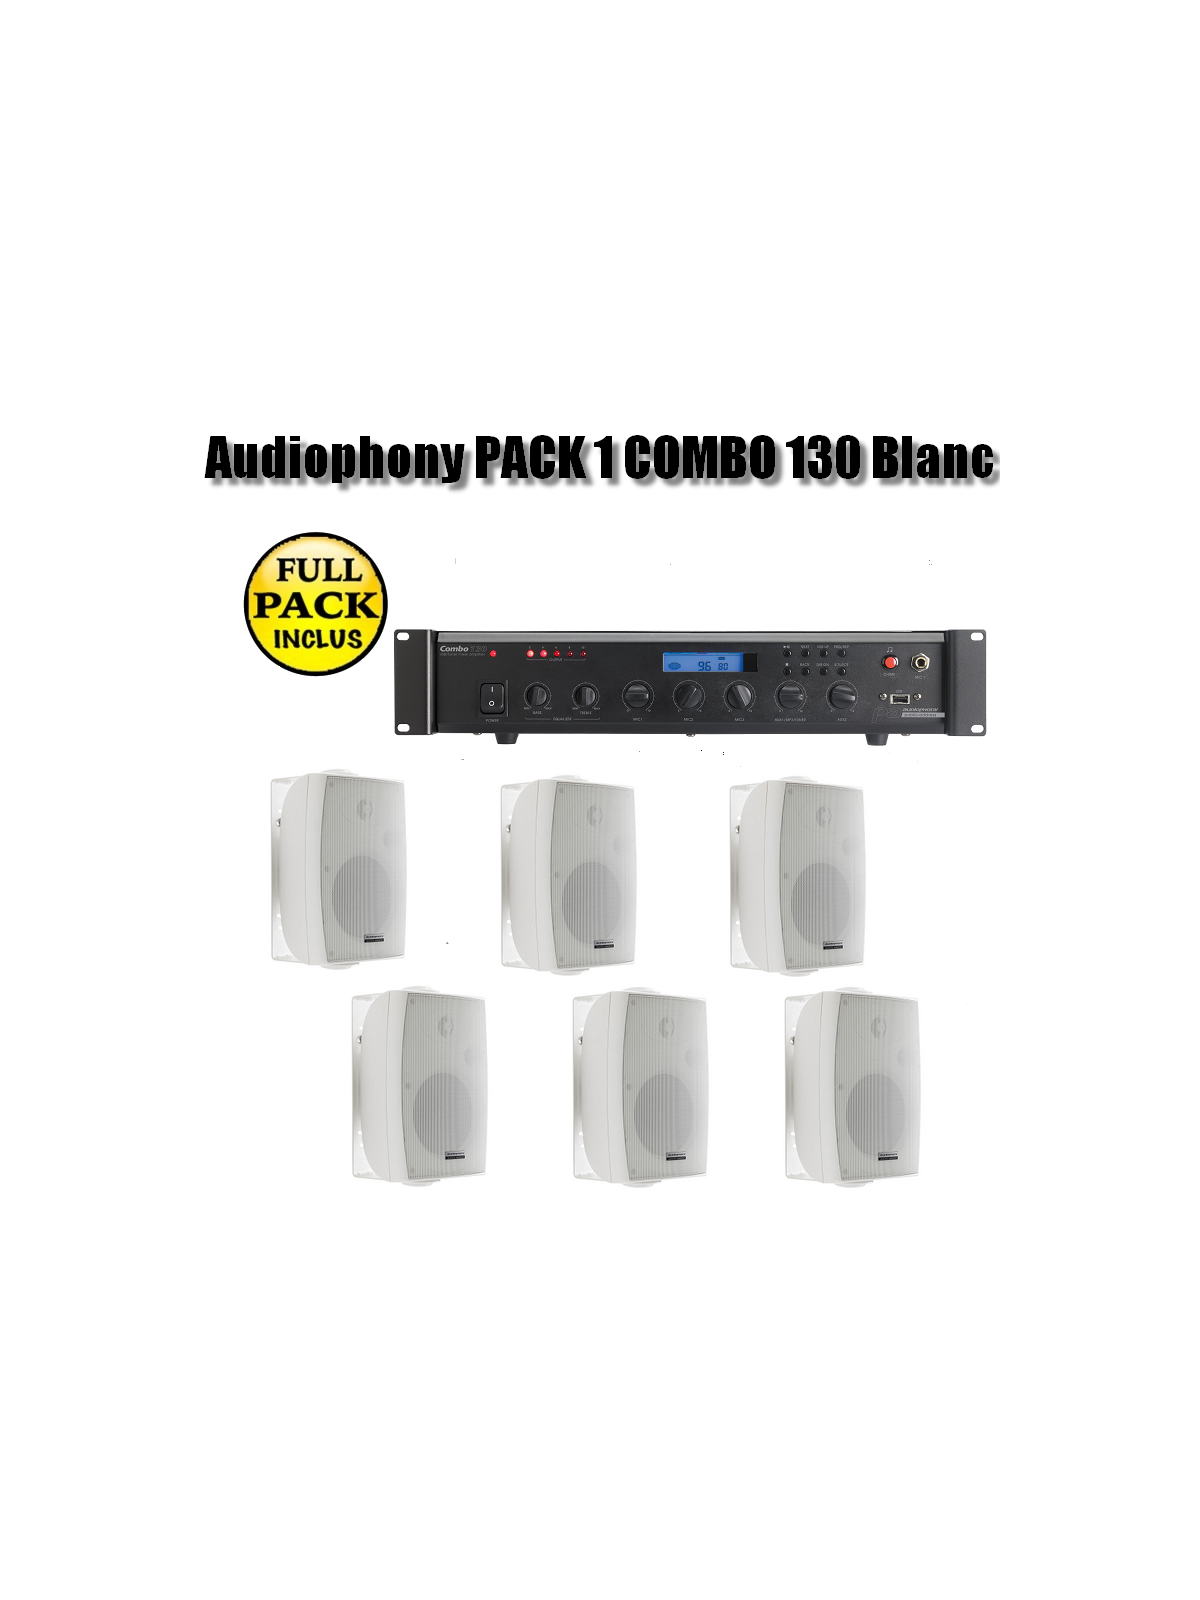 Audiophony PACK 1 COMBO 130 Blanc